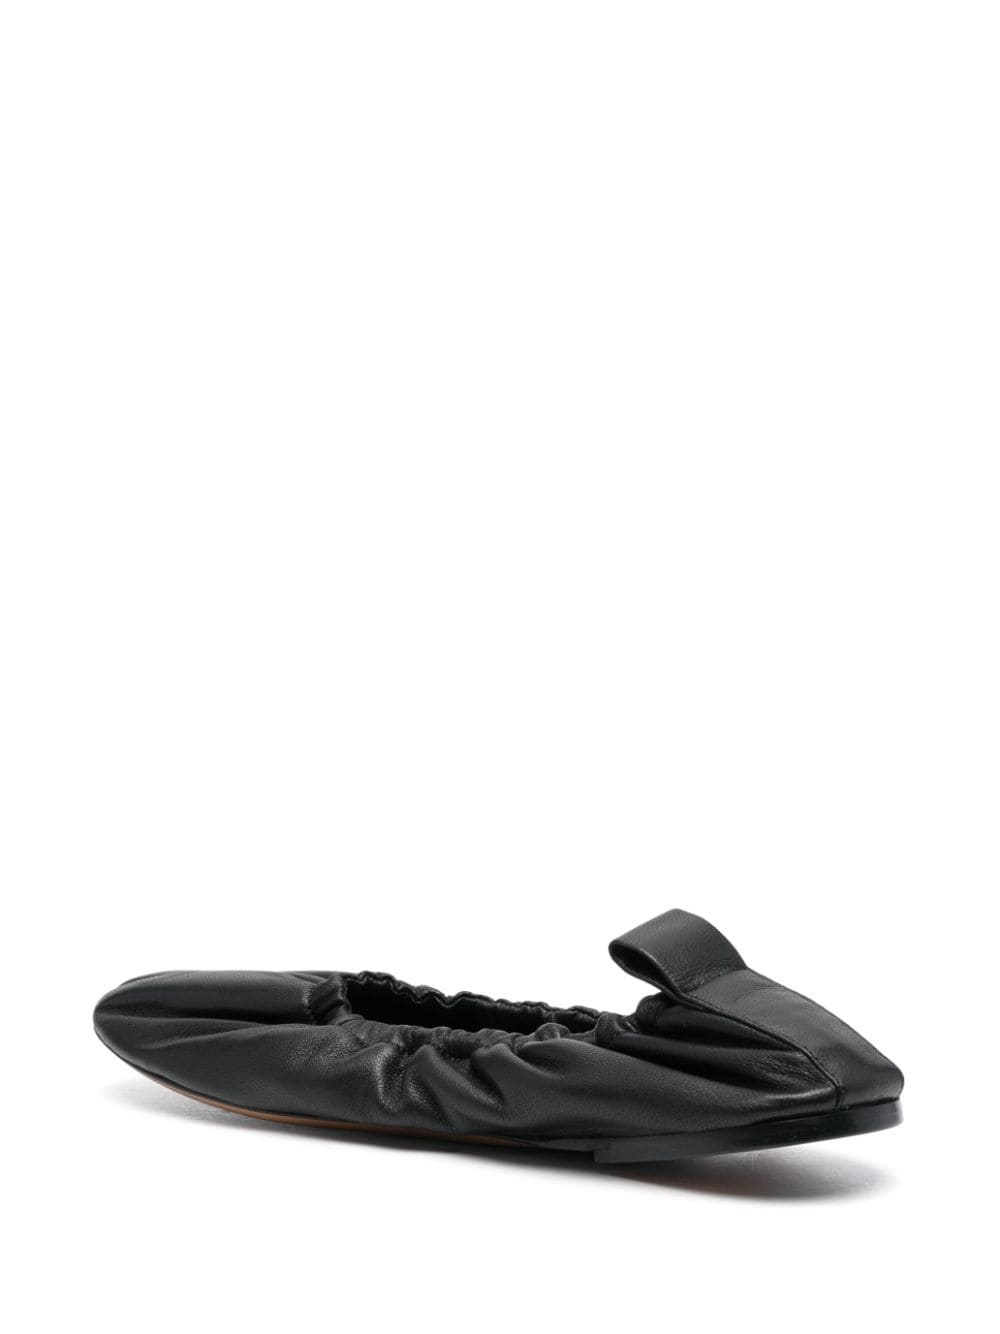 slip-on leather ballerina shoes - 3